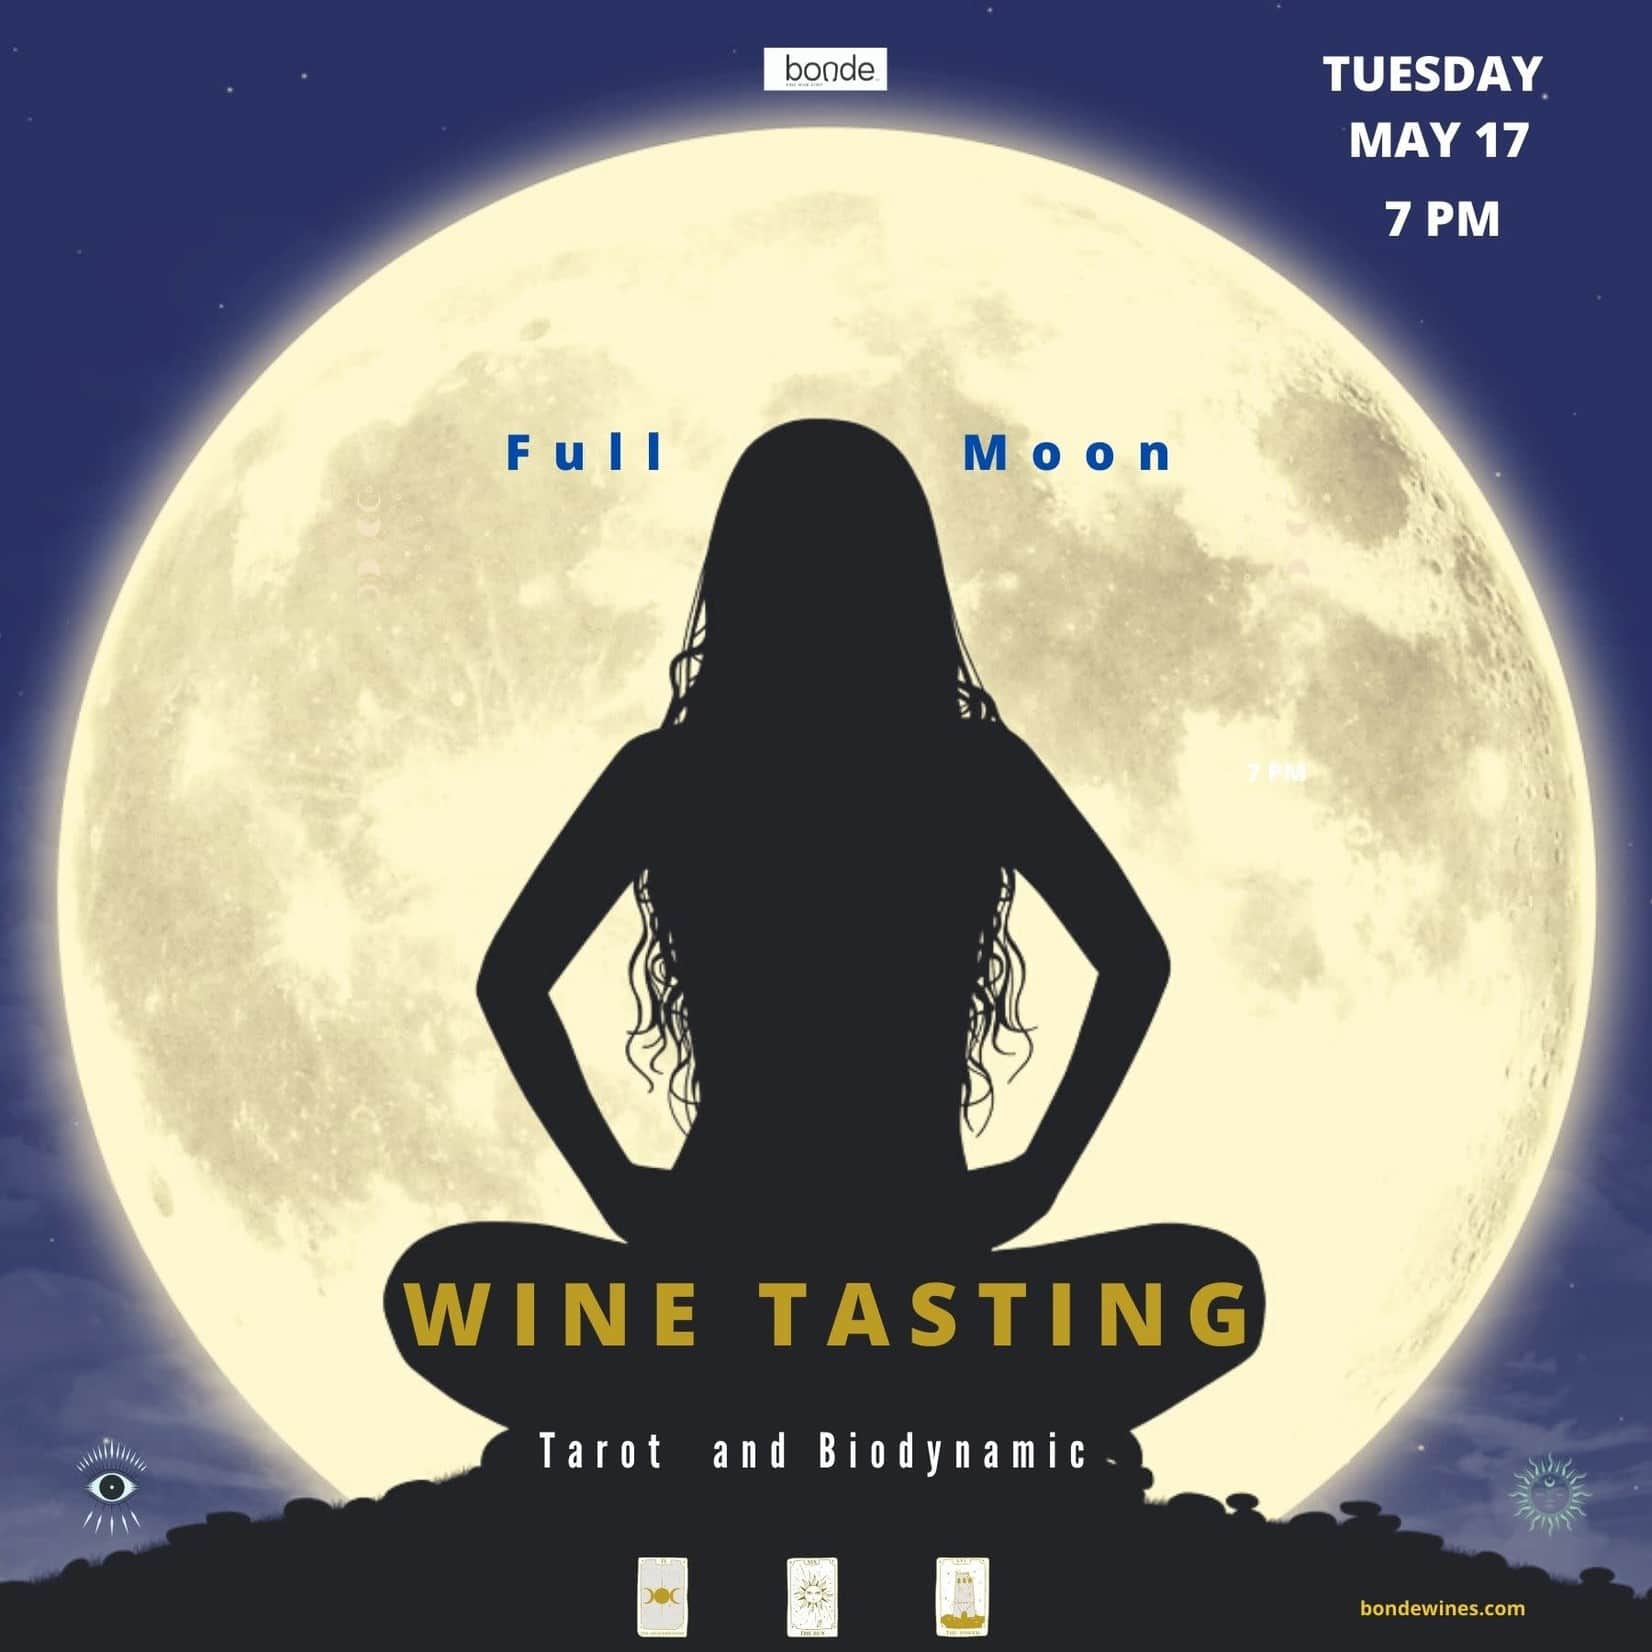 Tuesday Wine Tasting - Full Moon - May 17 - 7:00 p.m.